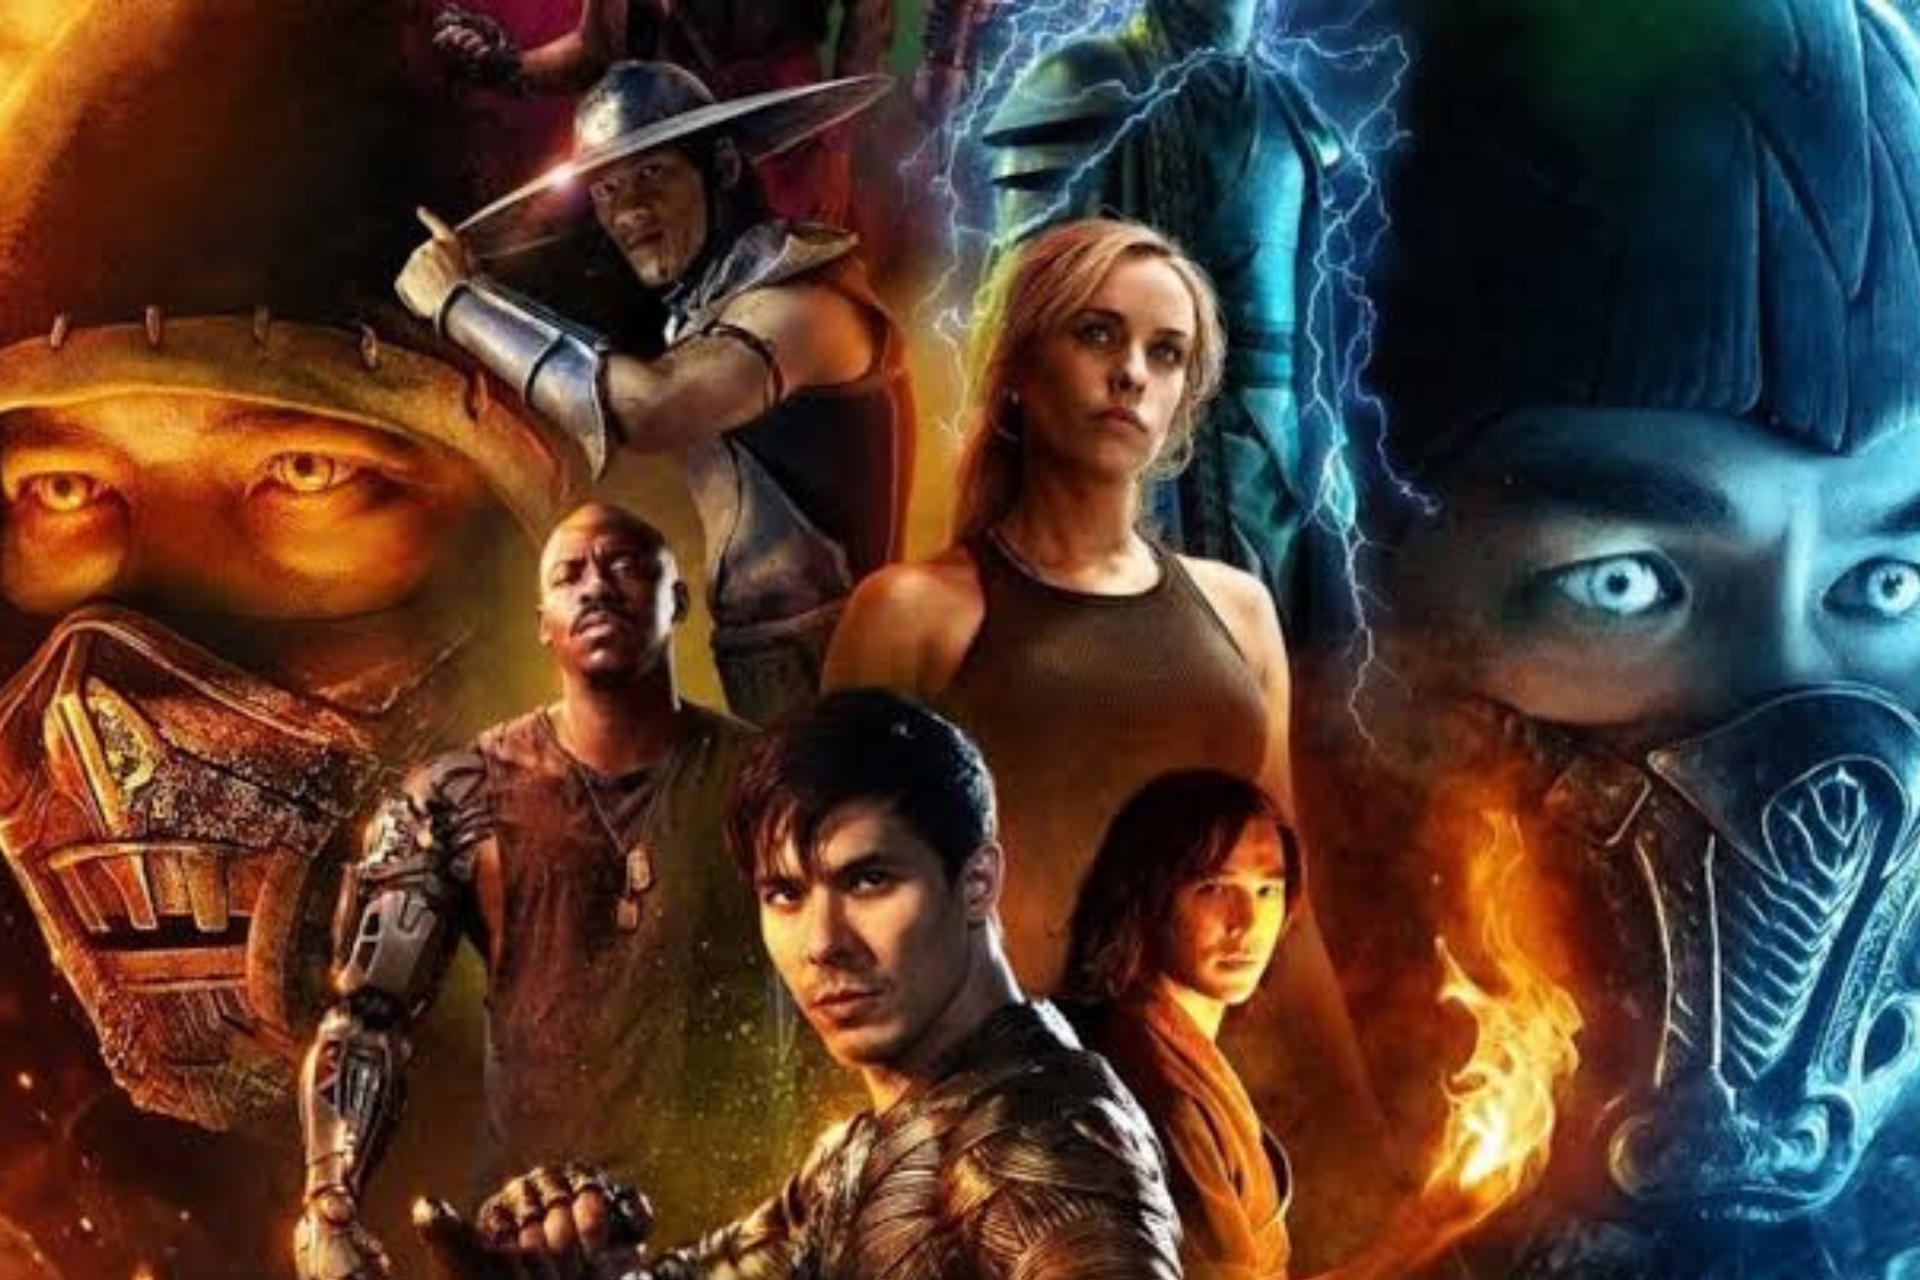 Was Mortal Kombat 2021 a flop? - Warner Bros executive answers